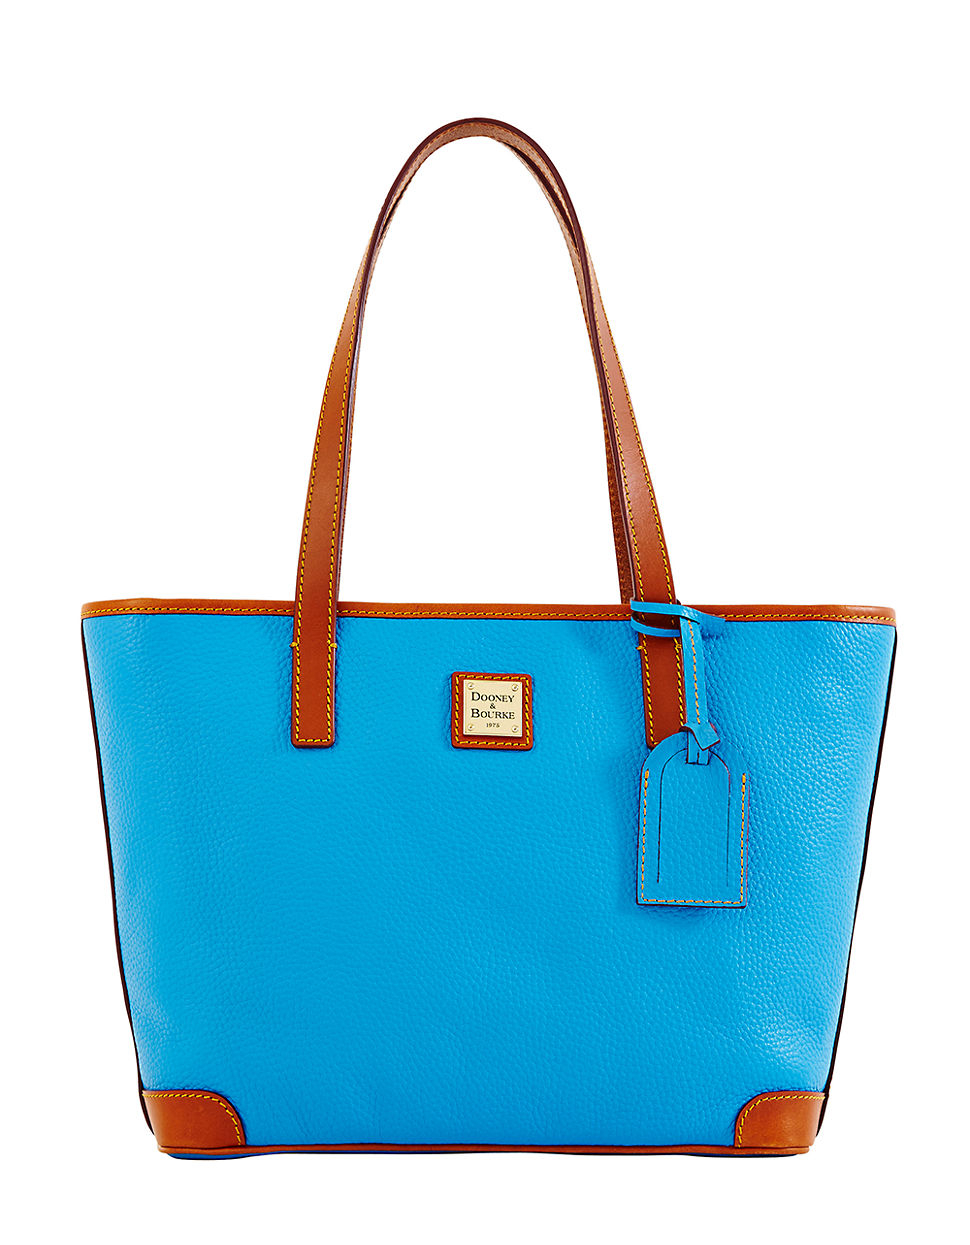 Dooney & Bourke Charleston Shopper Leather Tote Bag in Blue | Lyst